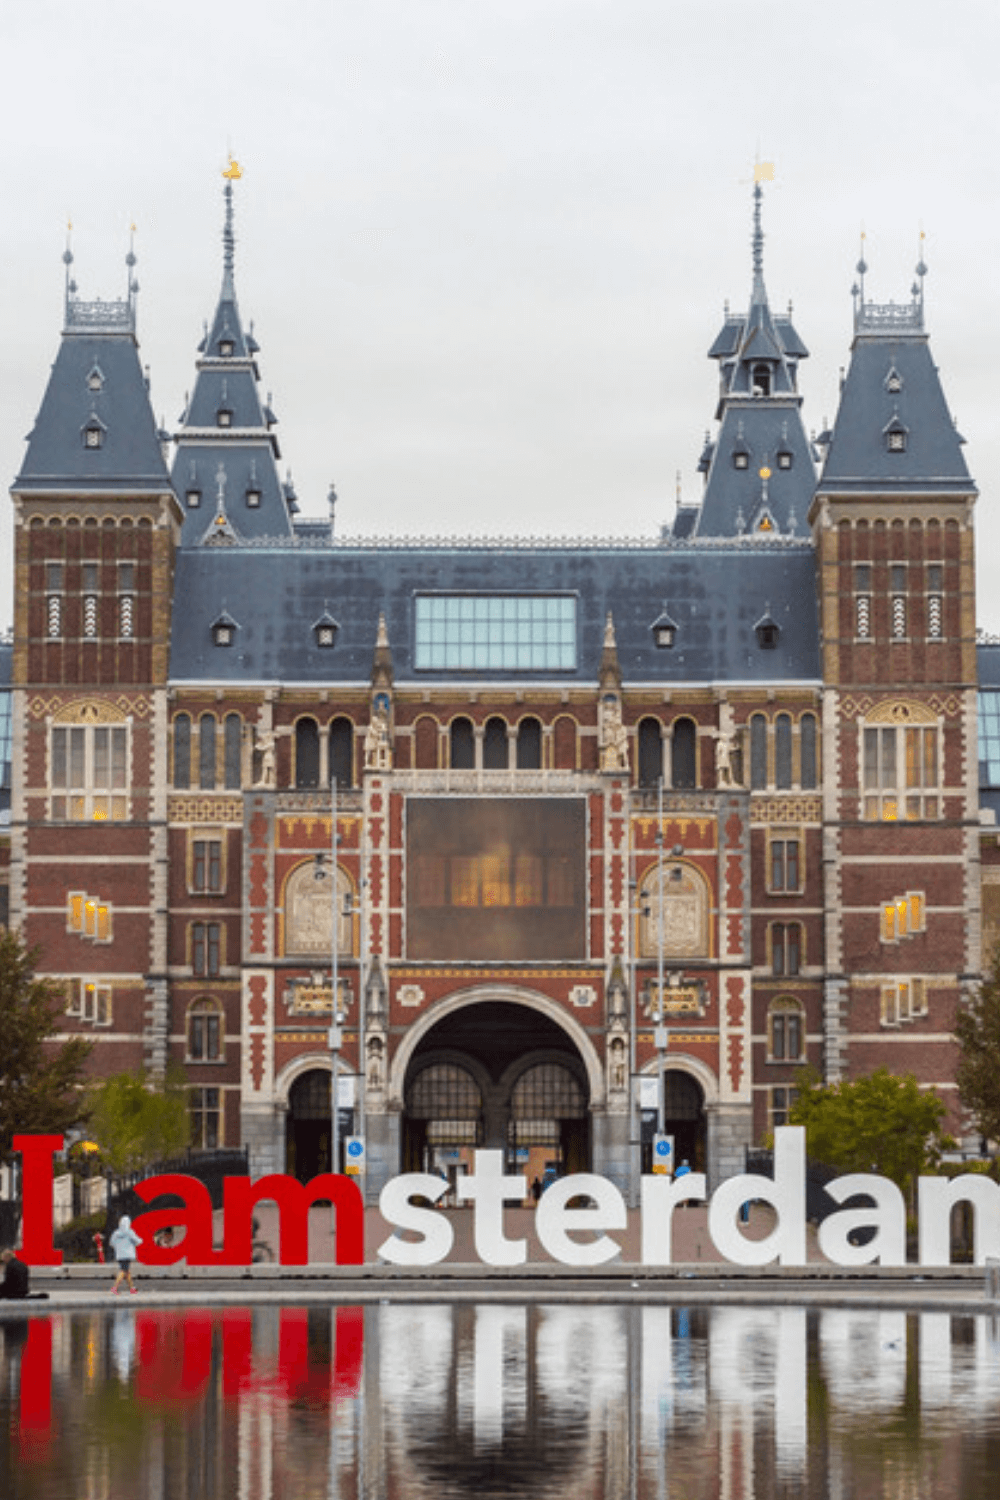 IAmsterdam sign